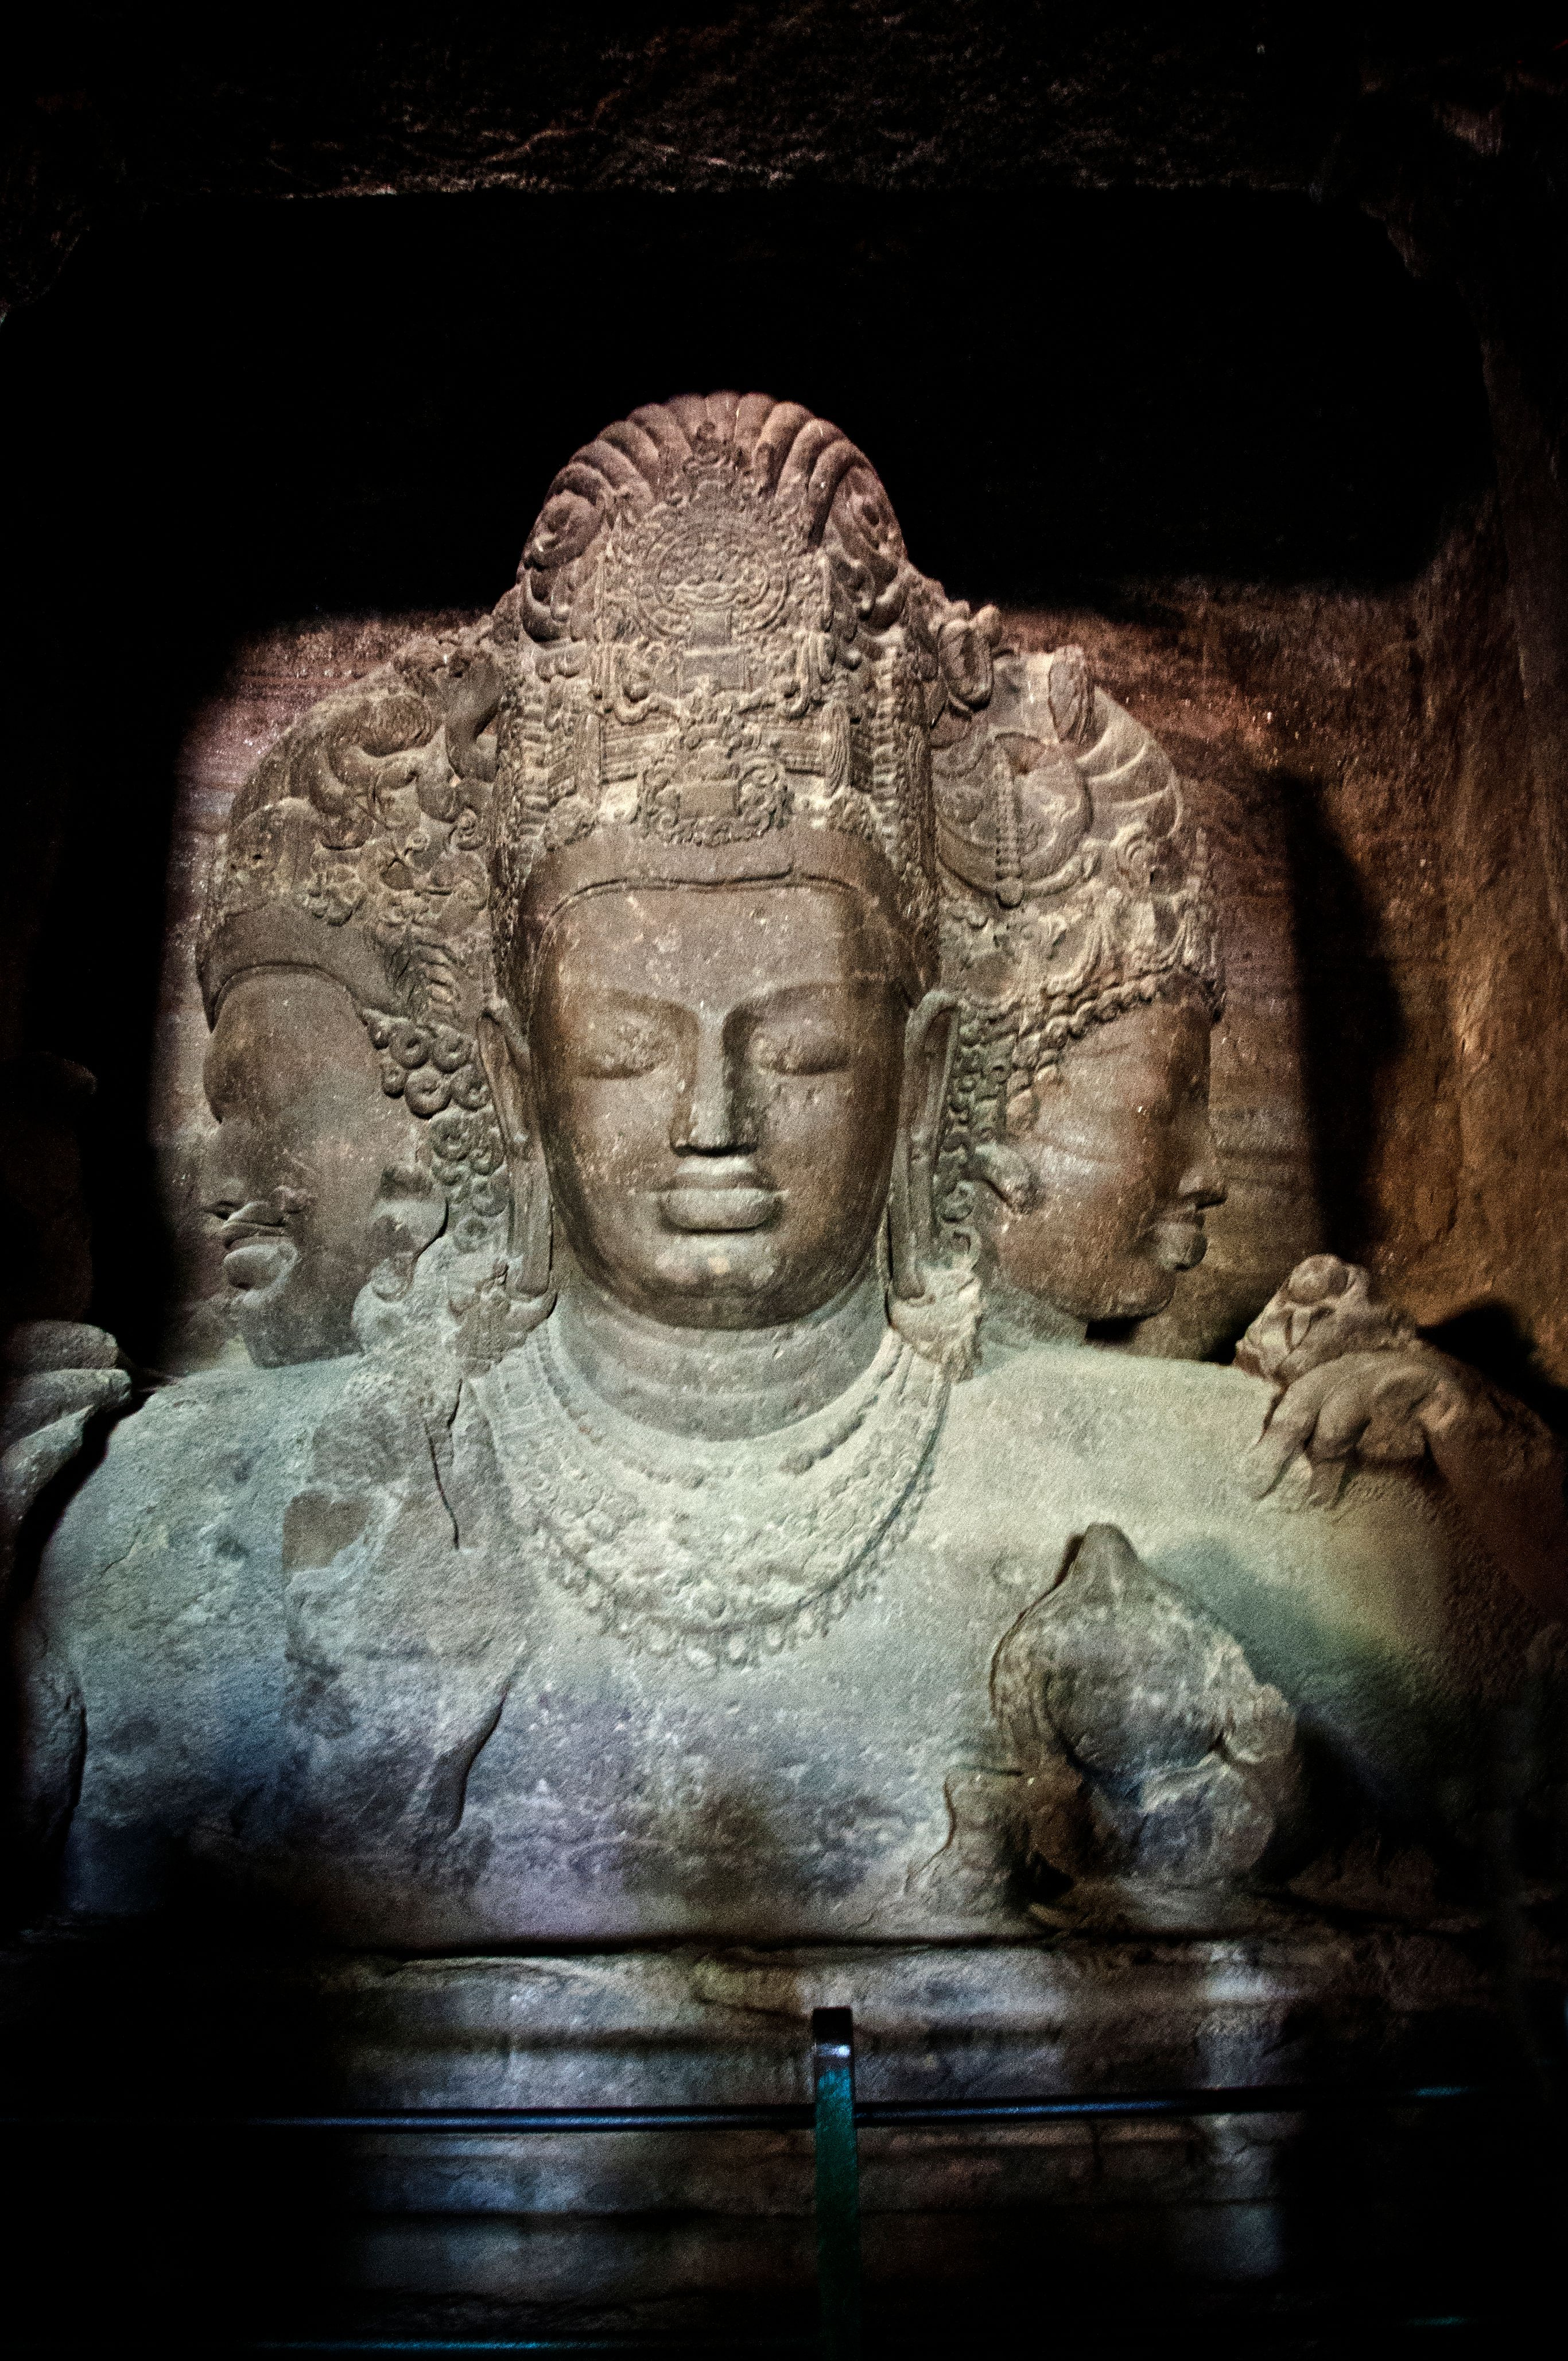  Mahesha murthy, Elephanta caves 